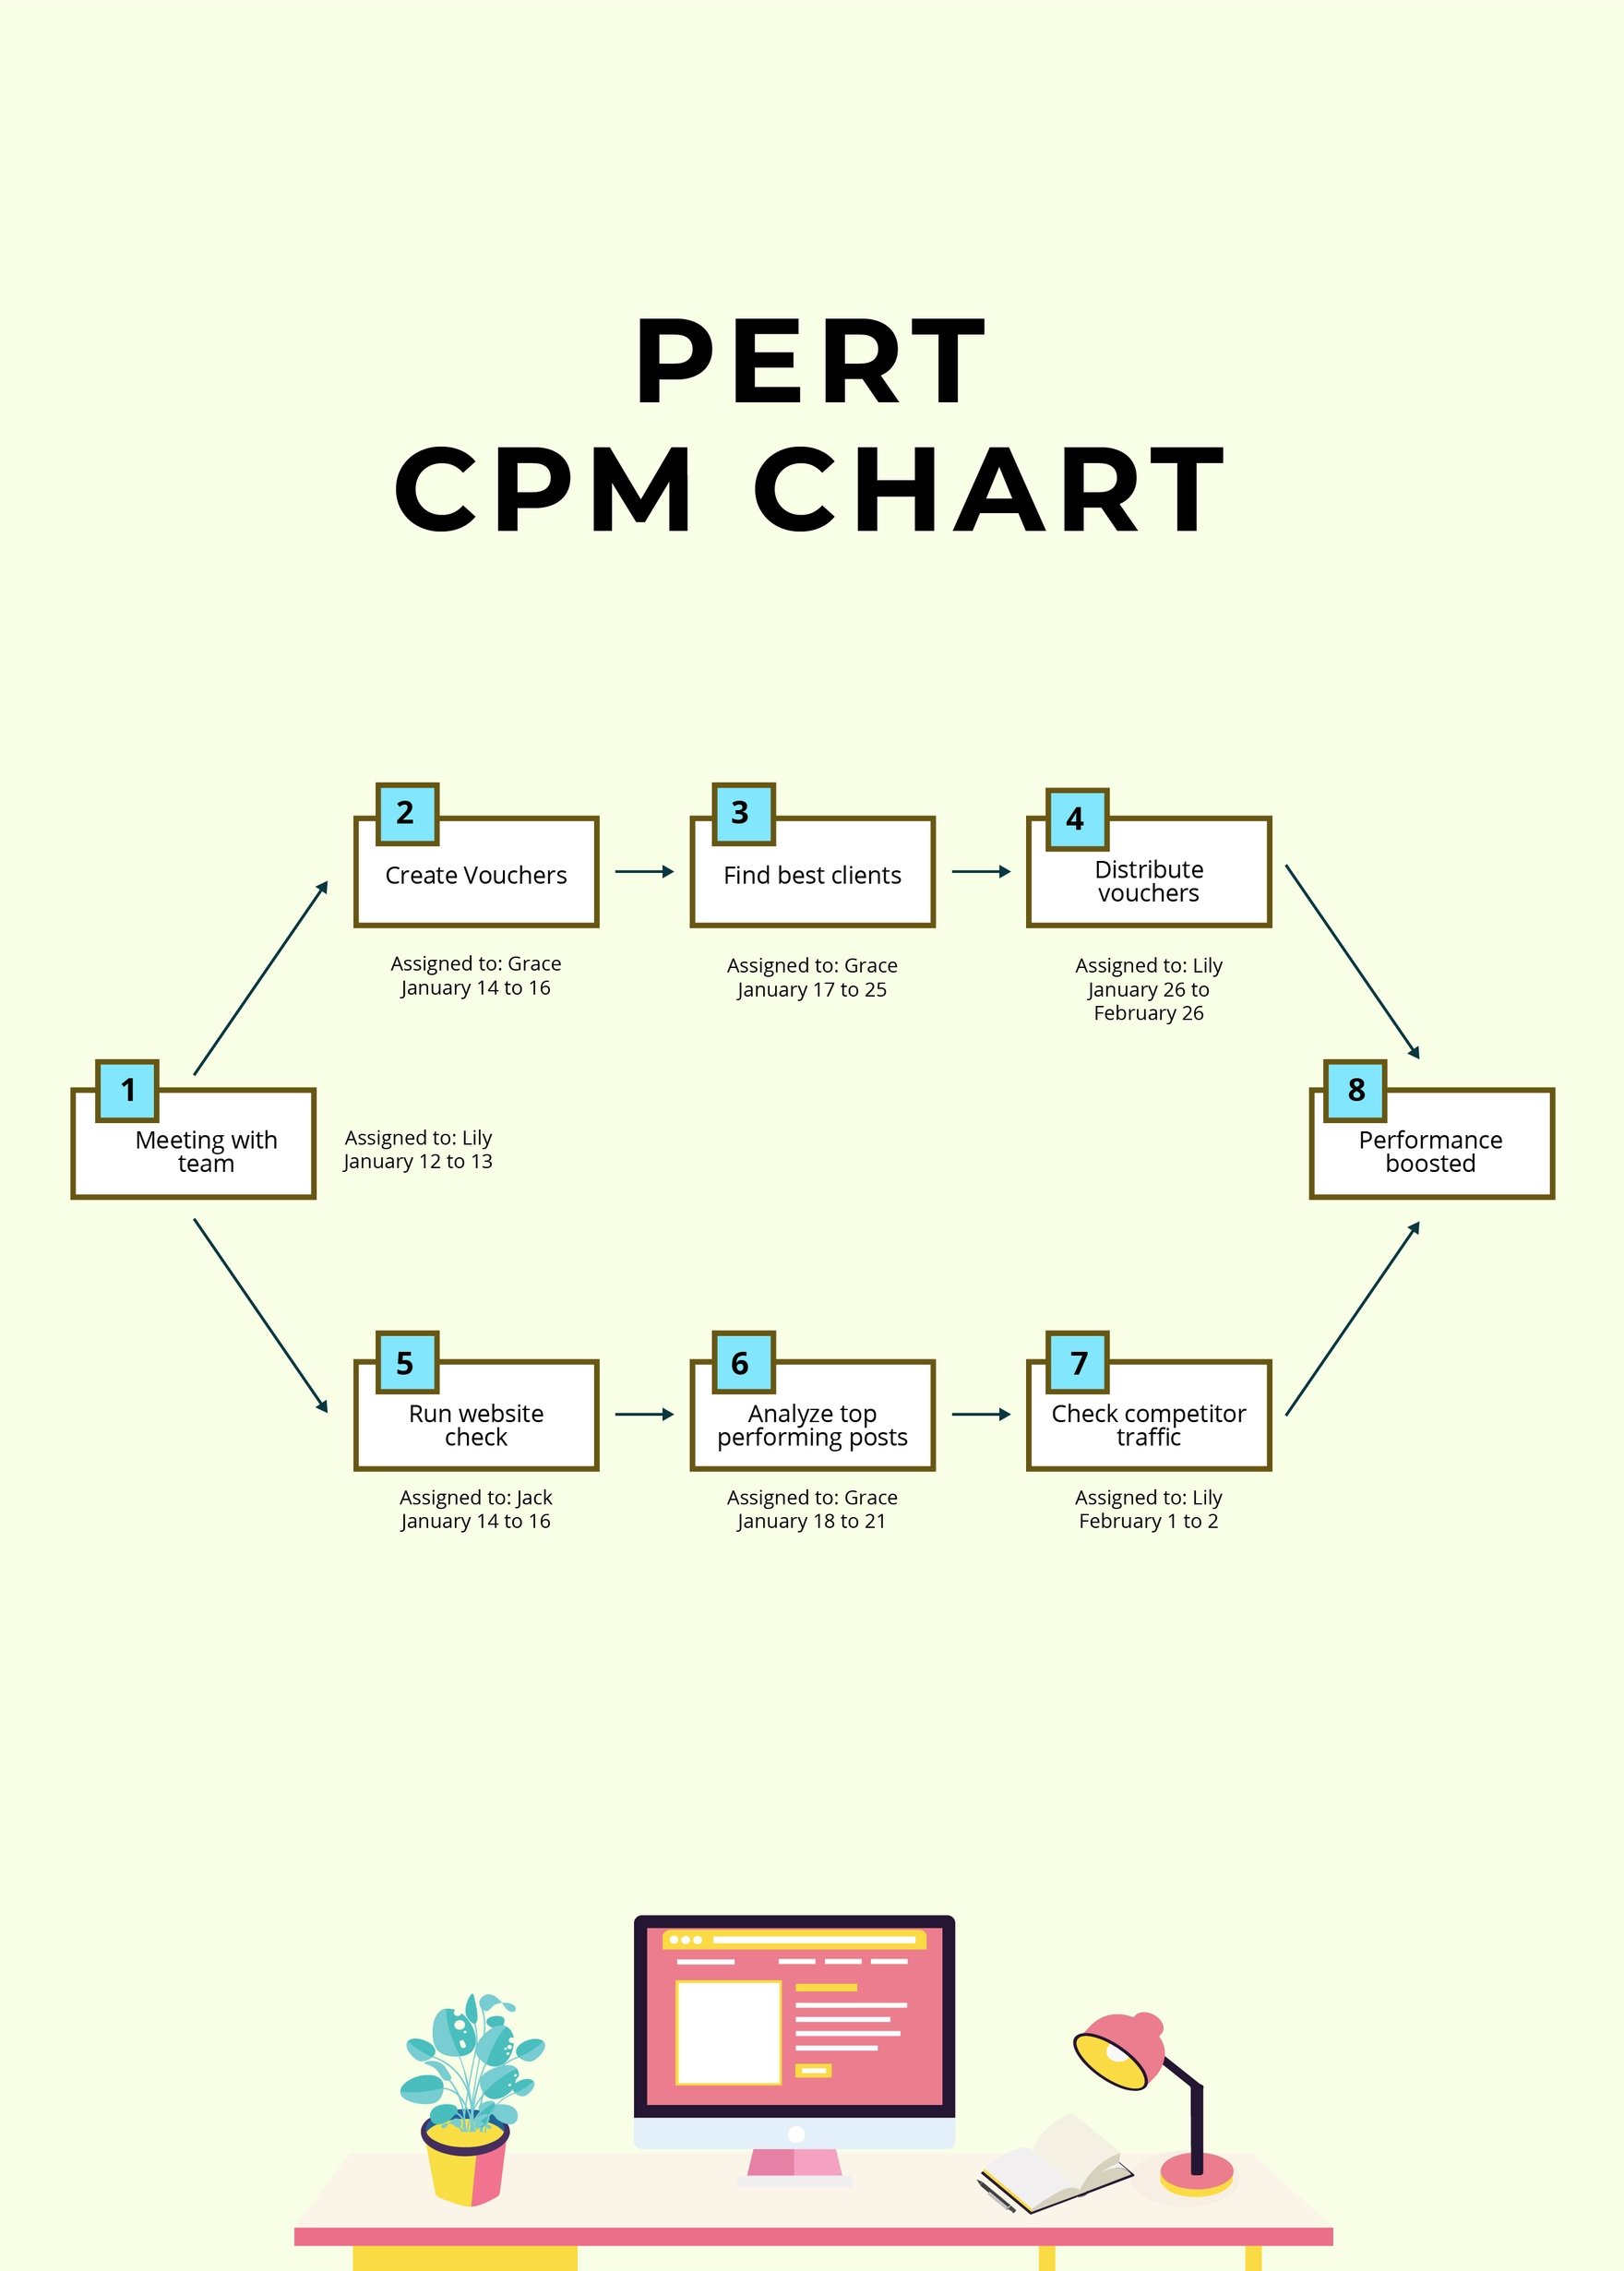 PERT CPM Chart